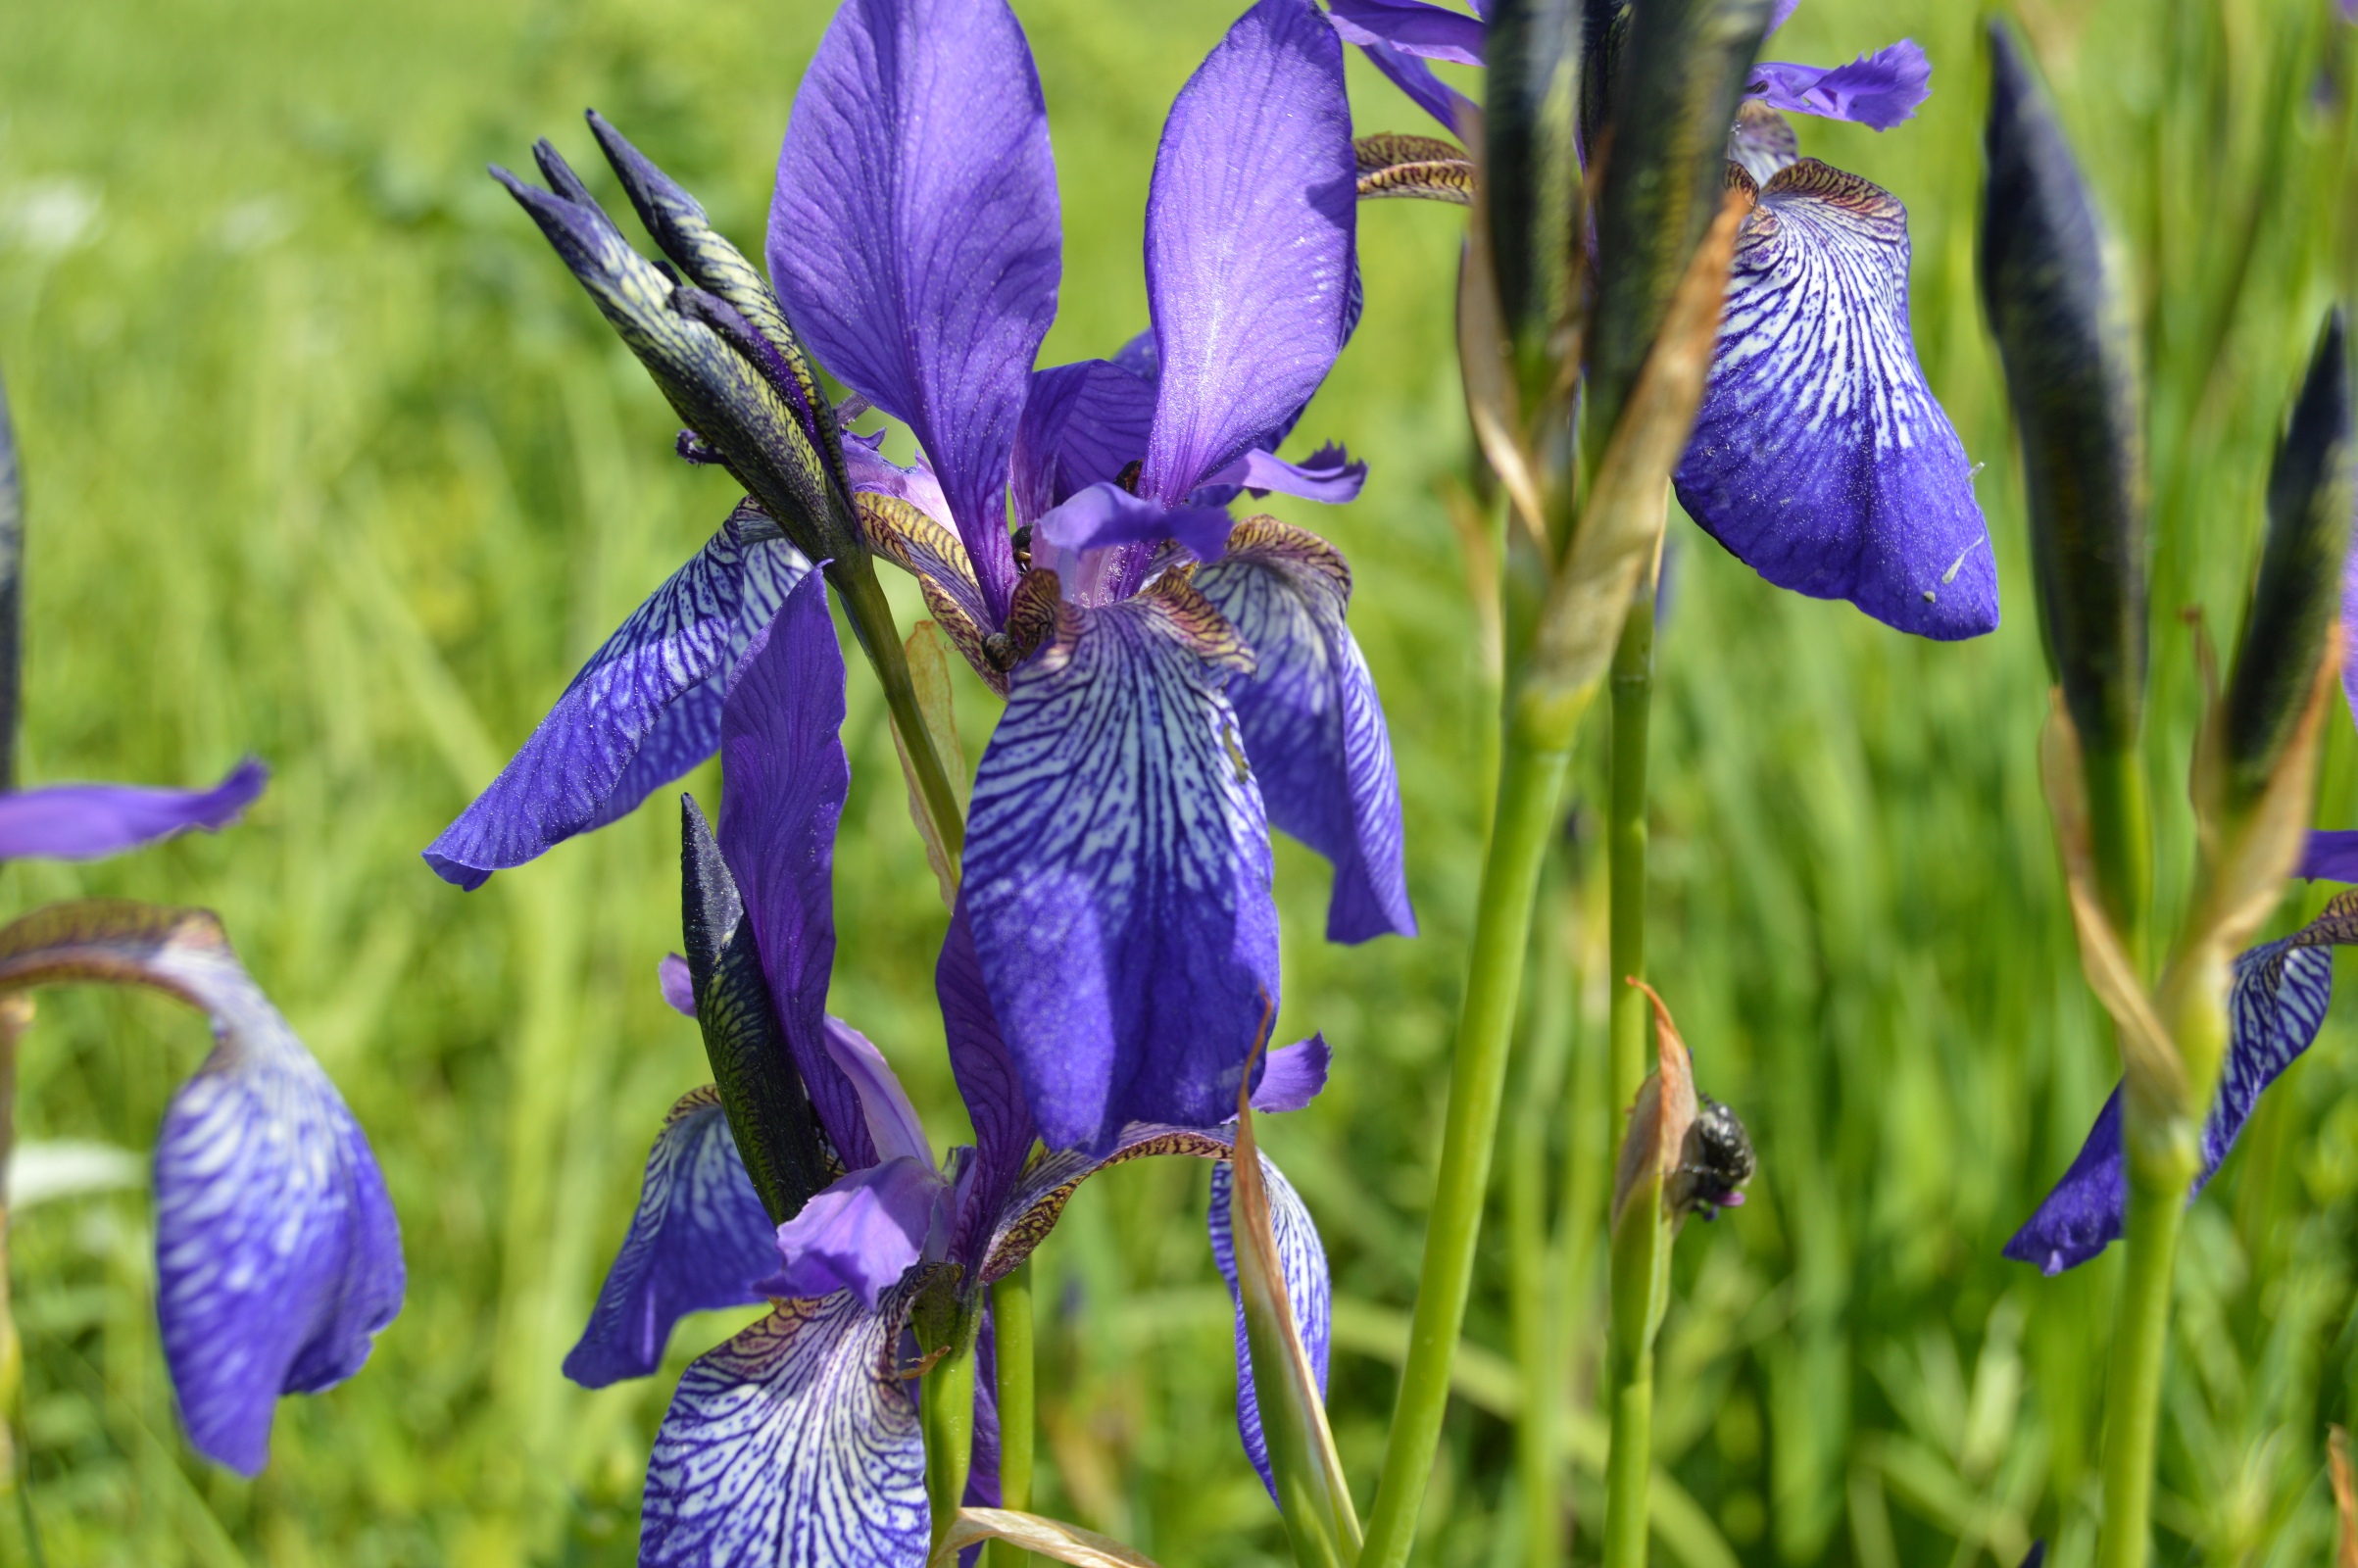 Field of iris flowers photo